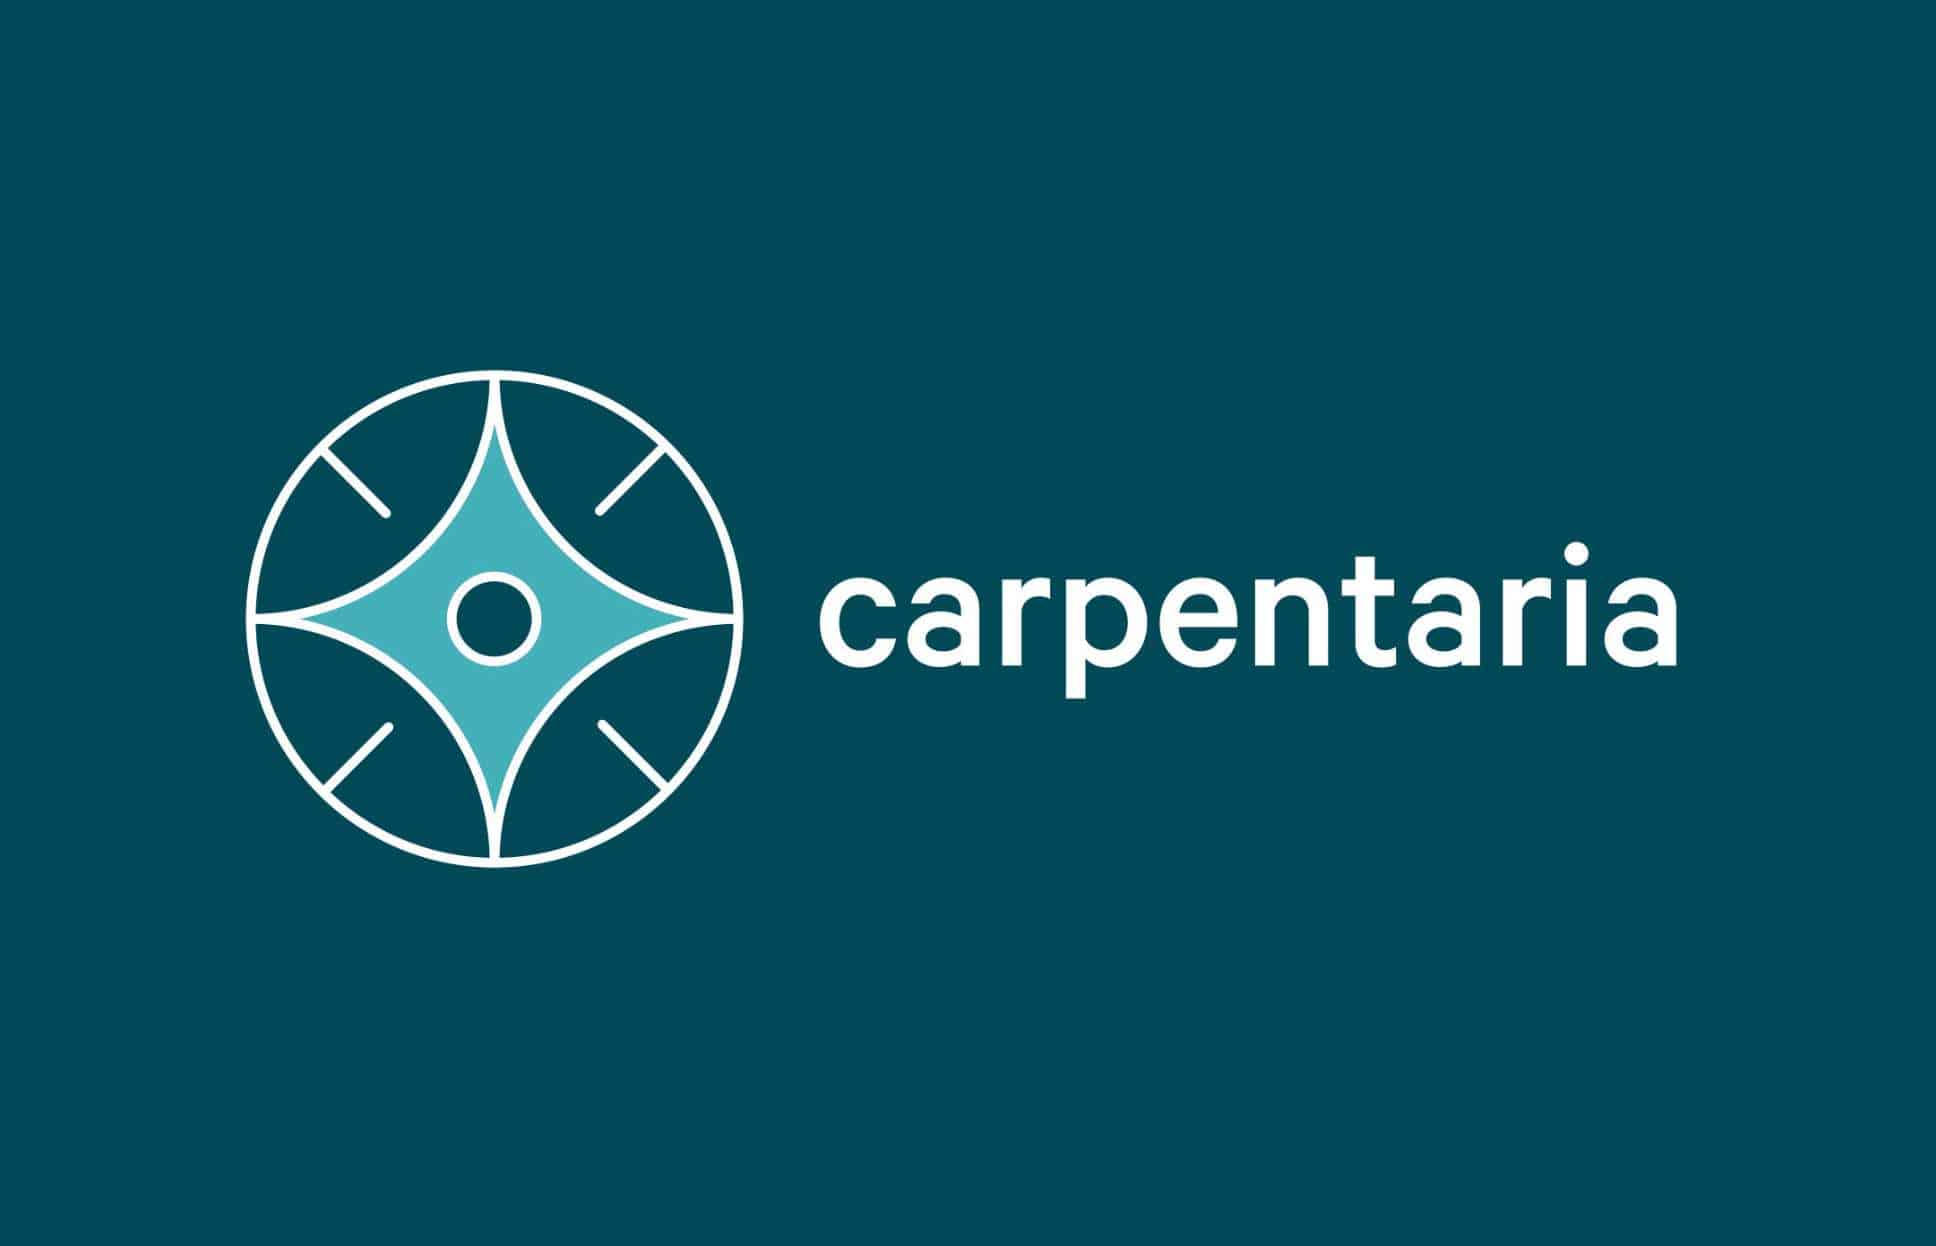 Carpentaria adopts new identity